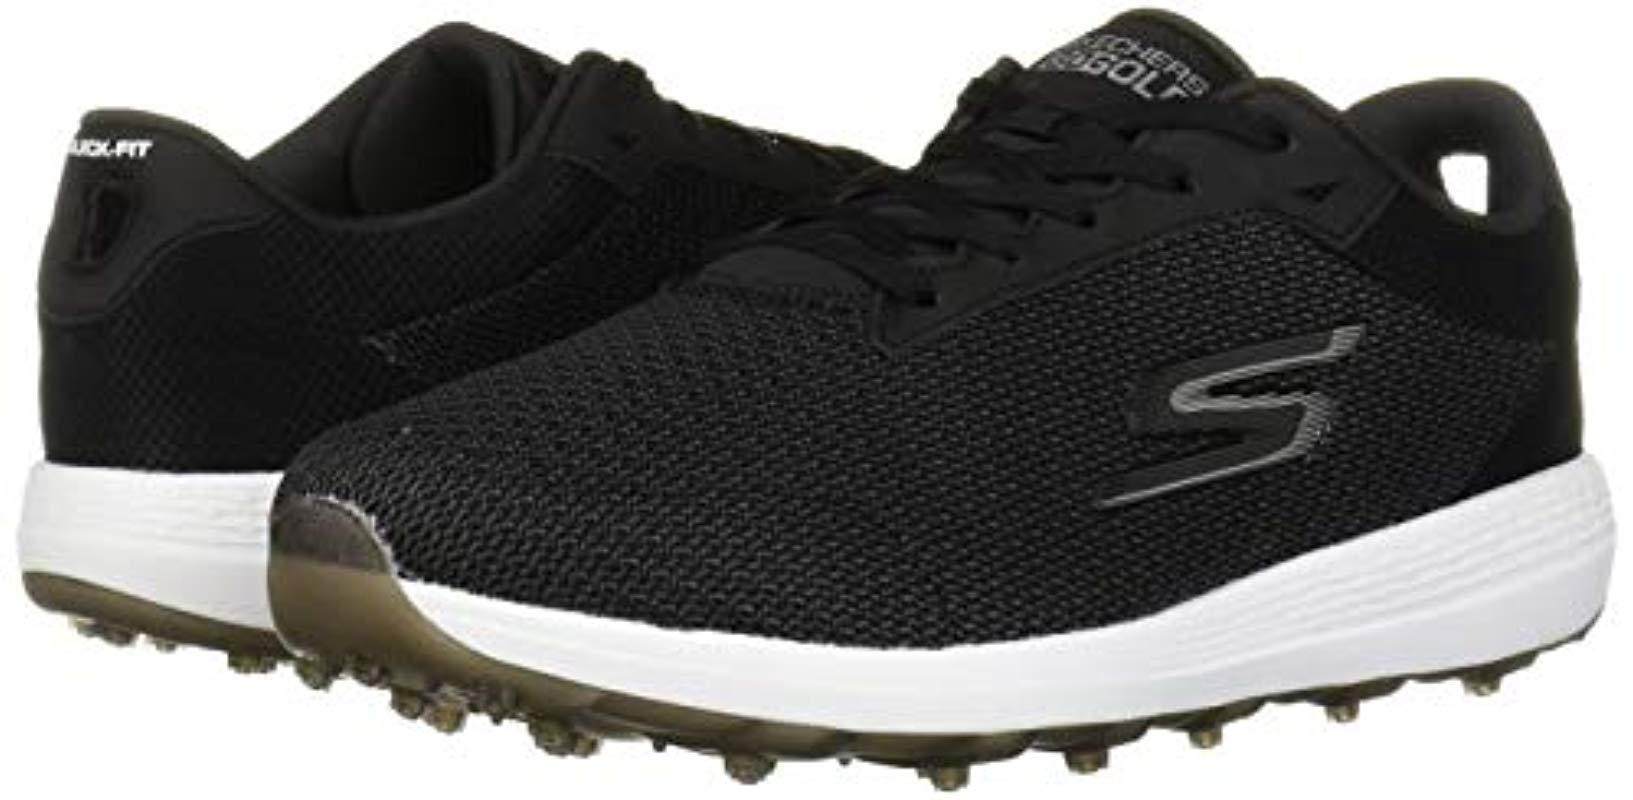 Skechers Max Fairway Spikeless Golf Shoe in Black for Men - Lyst